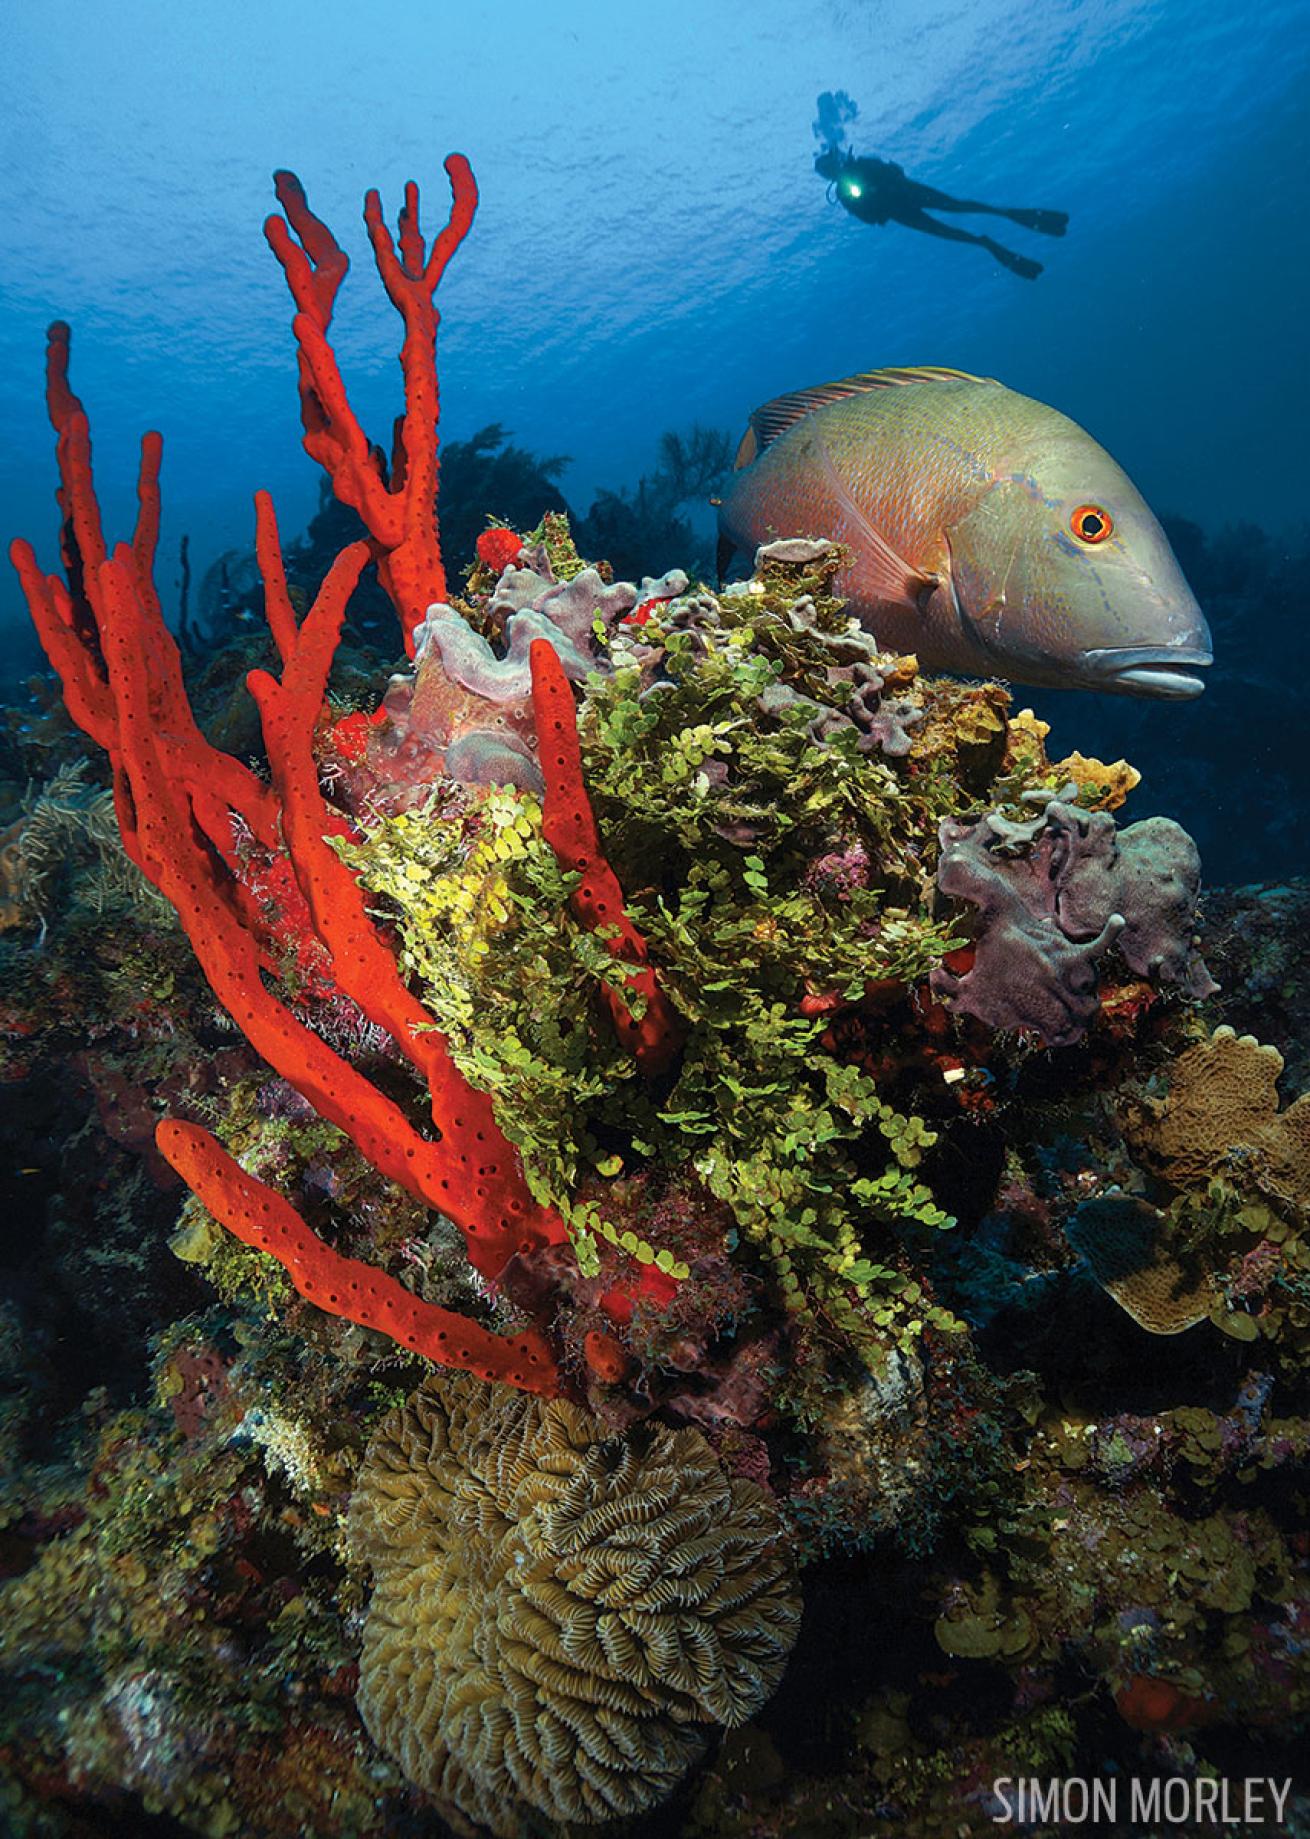 Cayman Islands Scuba Diving